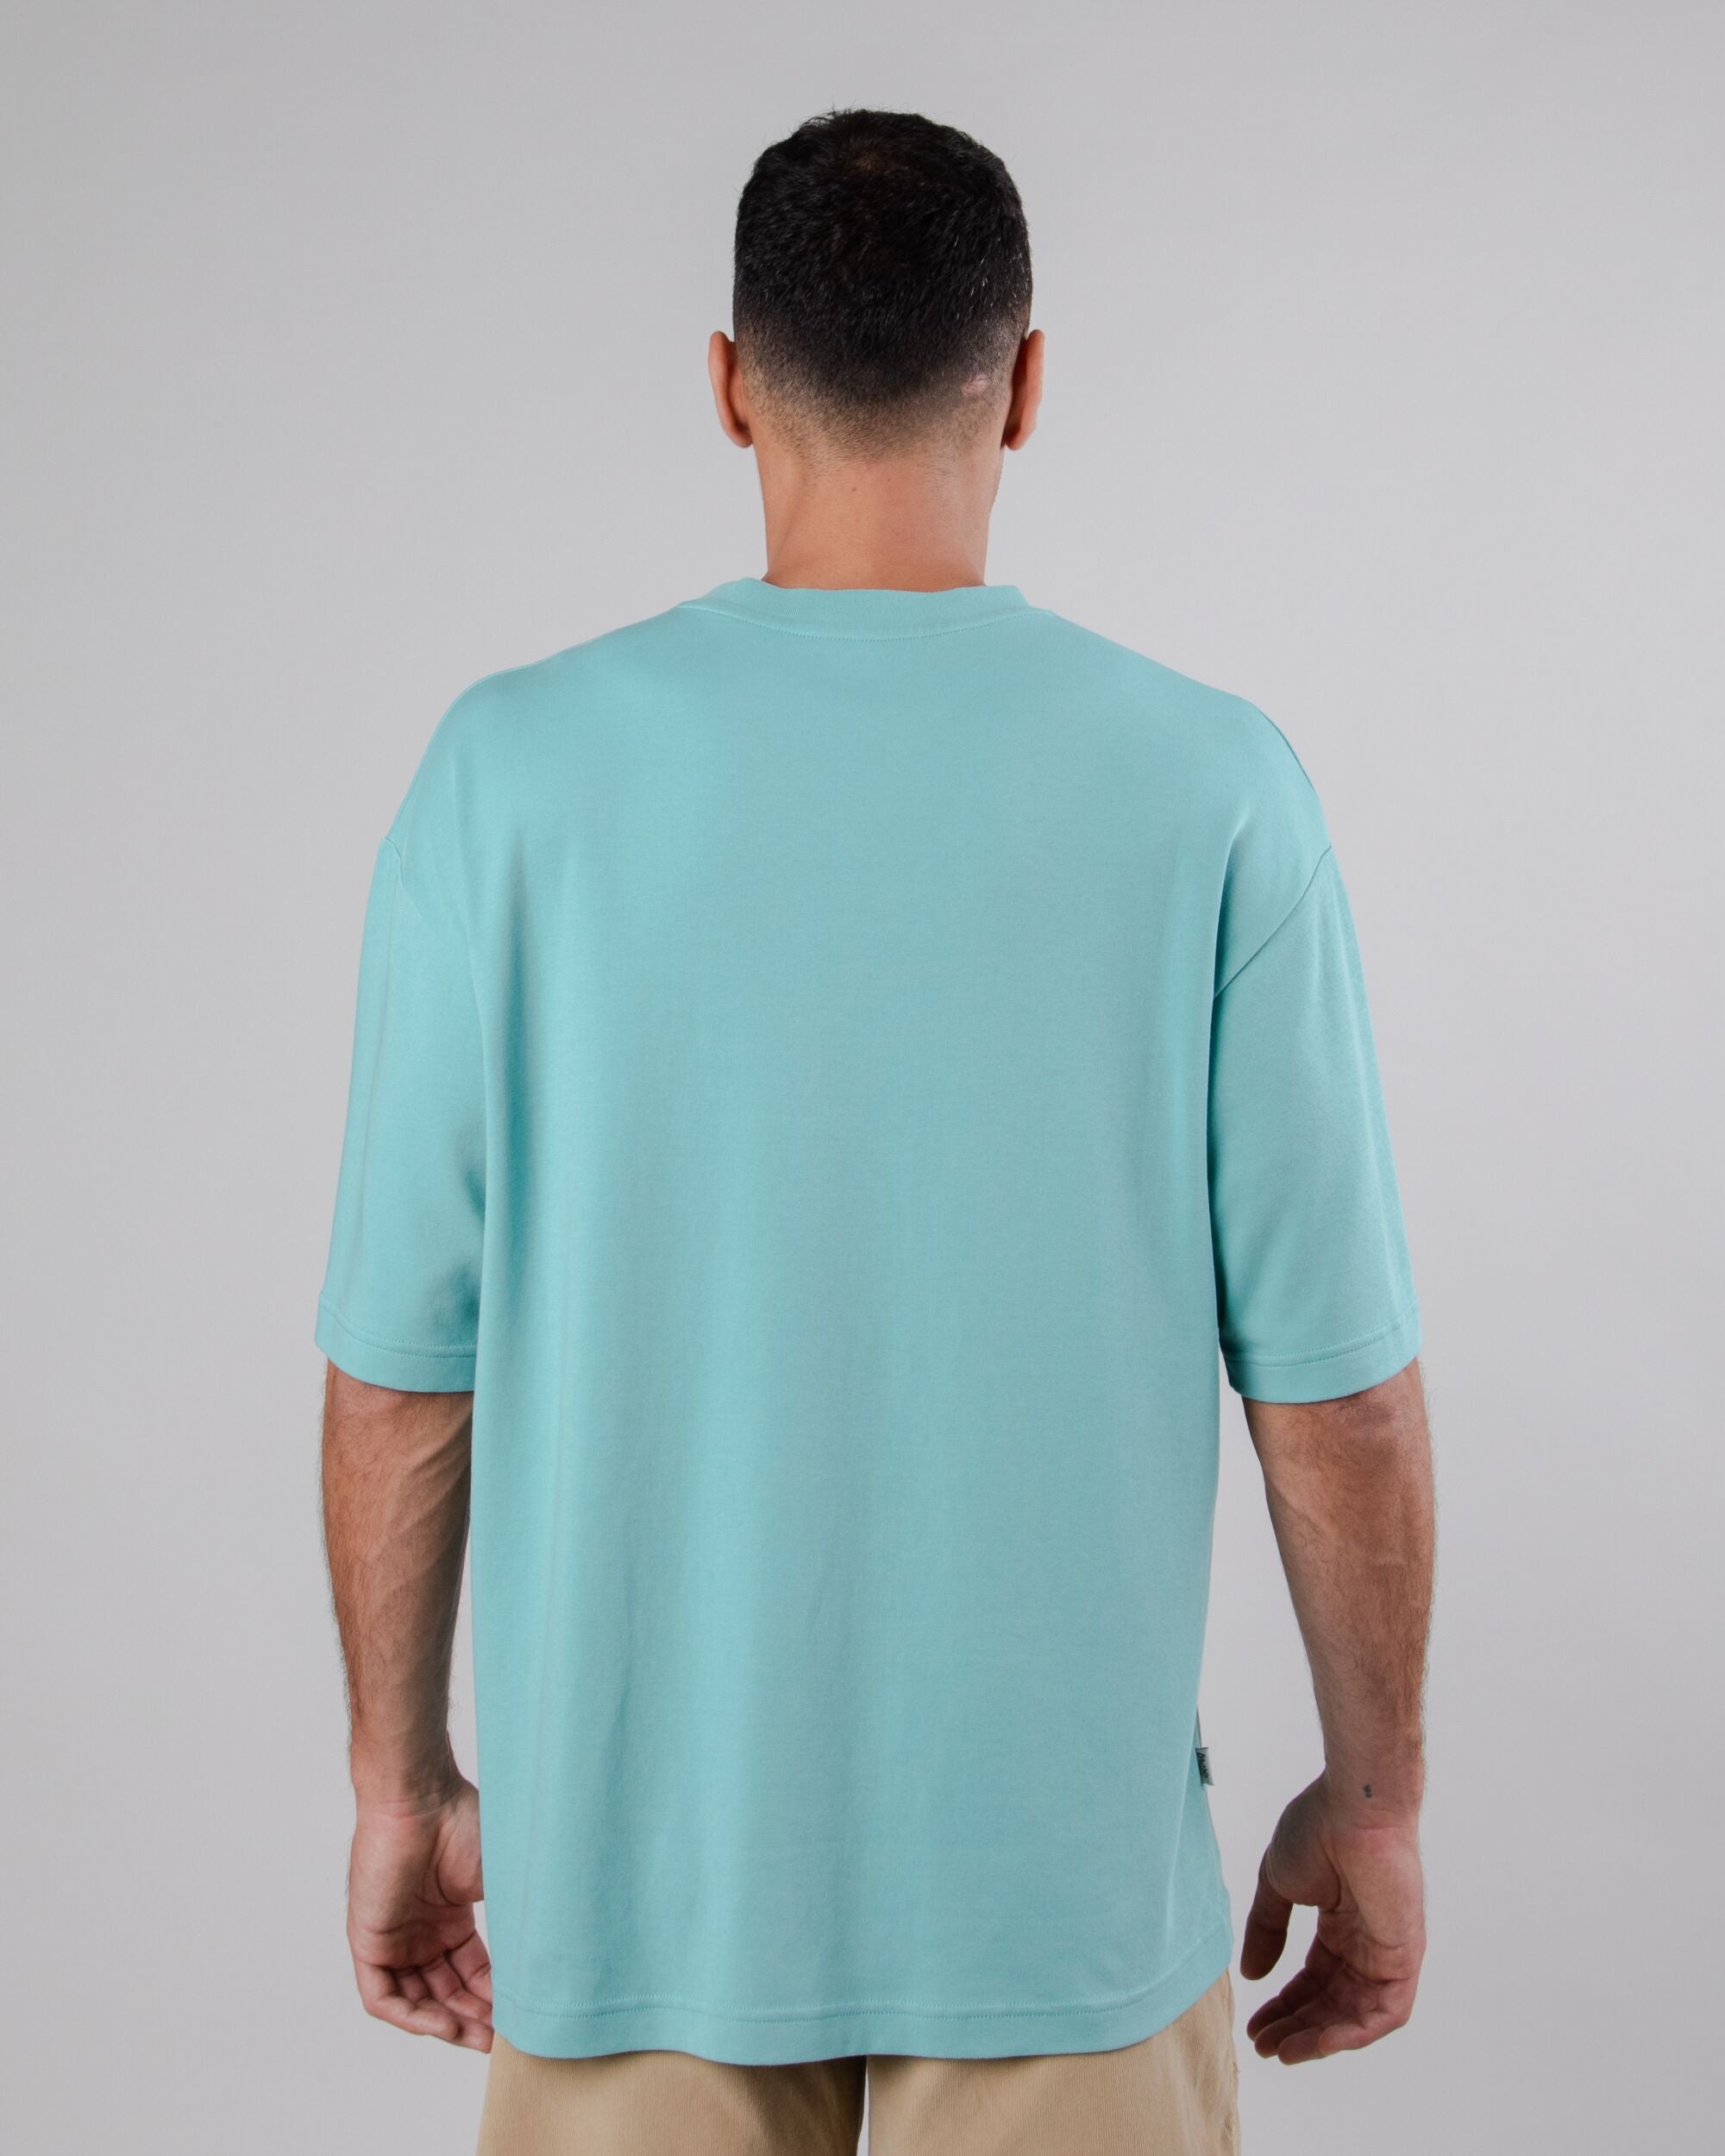 Blue oversize interlock cotton shirt from Brava Fabrics